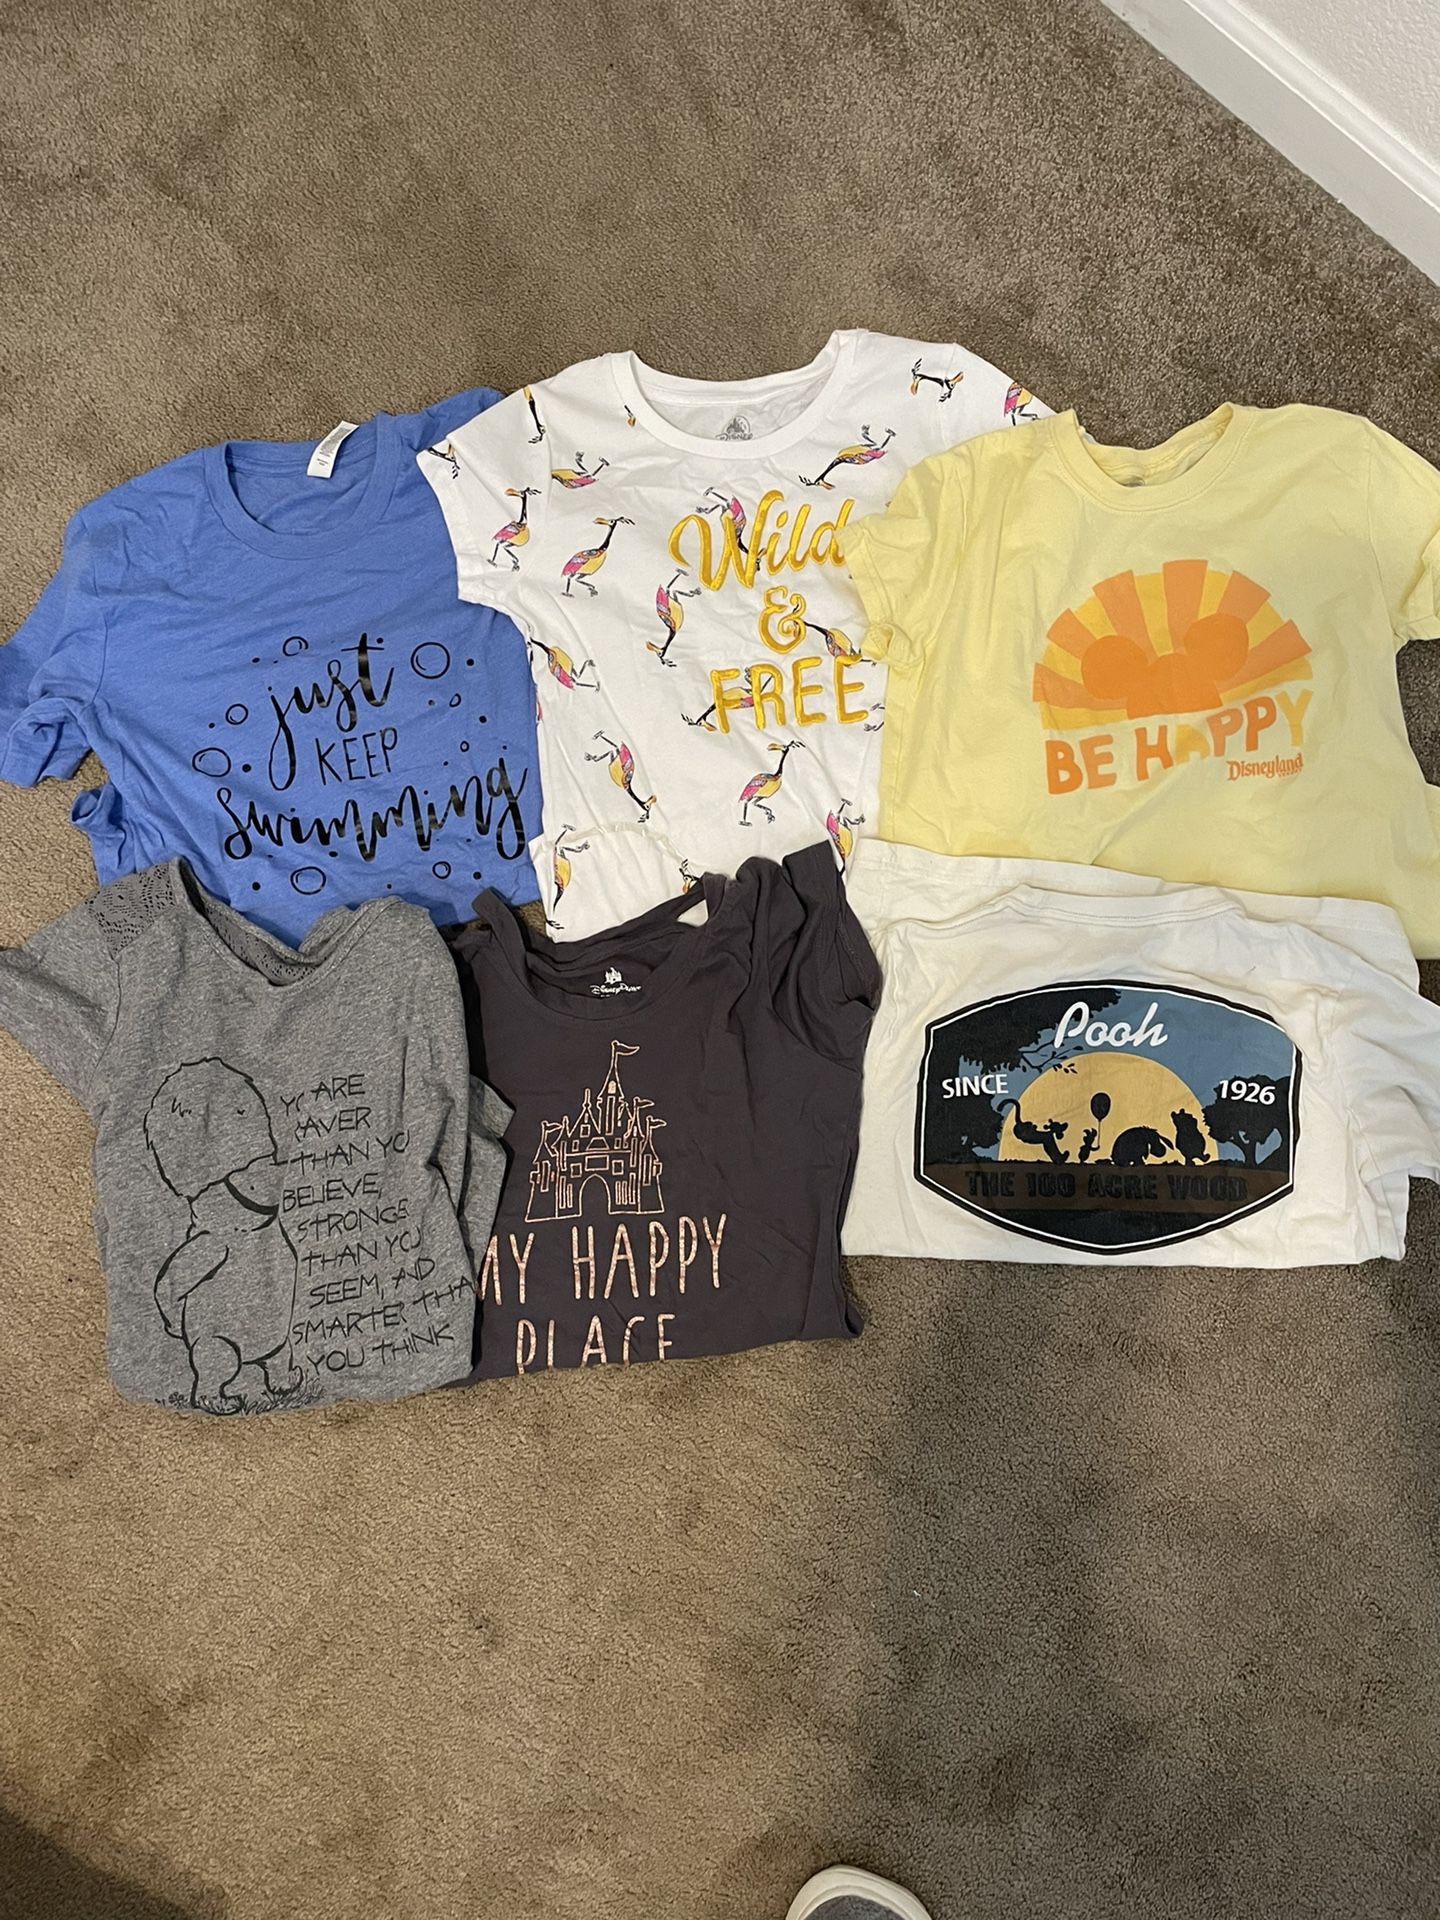 Six Disney women’s T-shirts